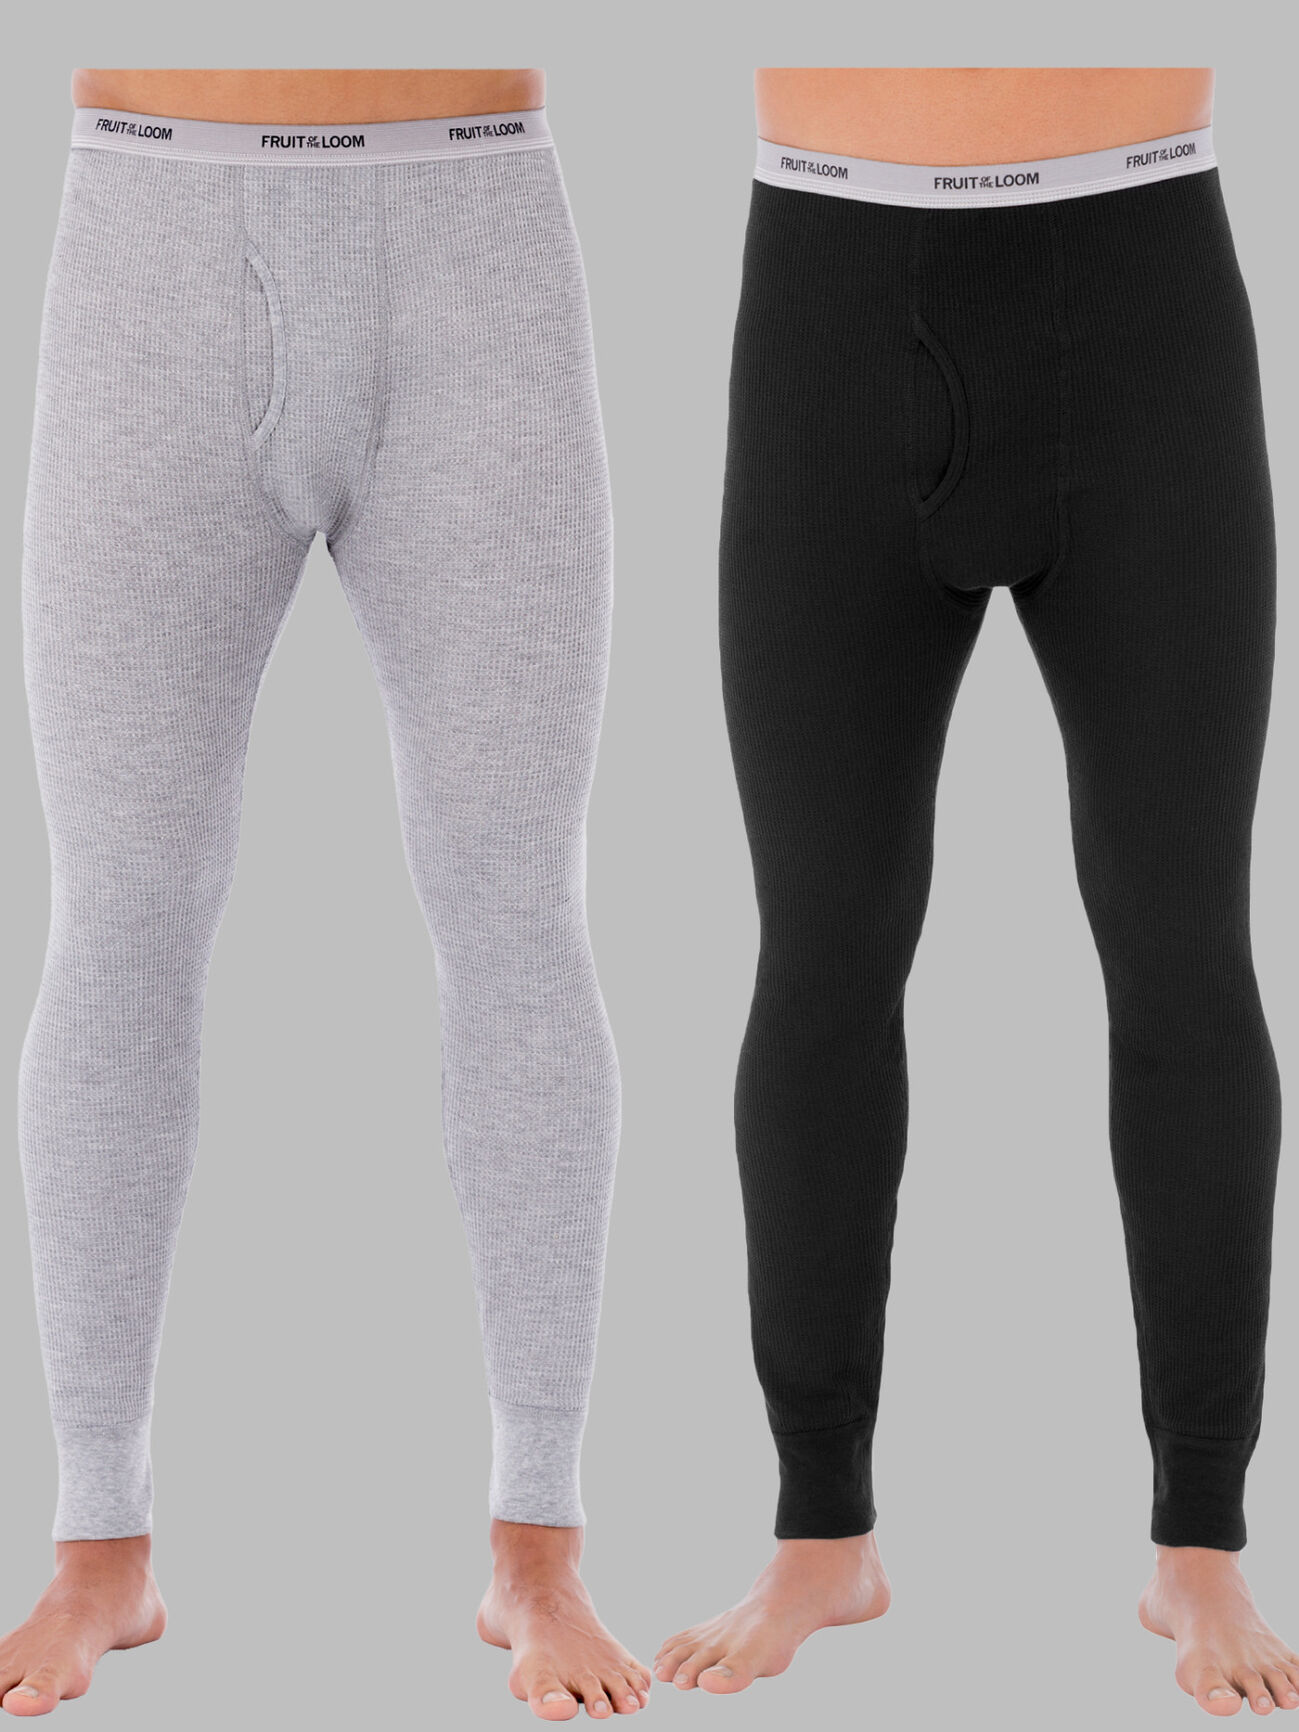 Buy Large Tall Thermal Underwear Mens Warm Thermal Set Sleeping Tops  Stretch Pajamas Black XL at